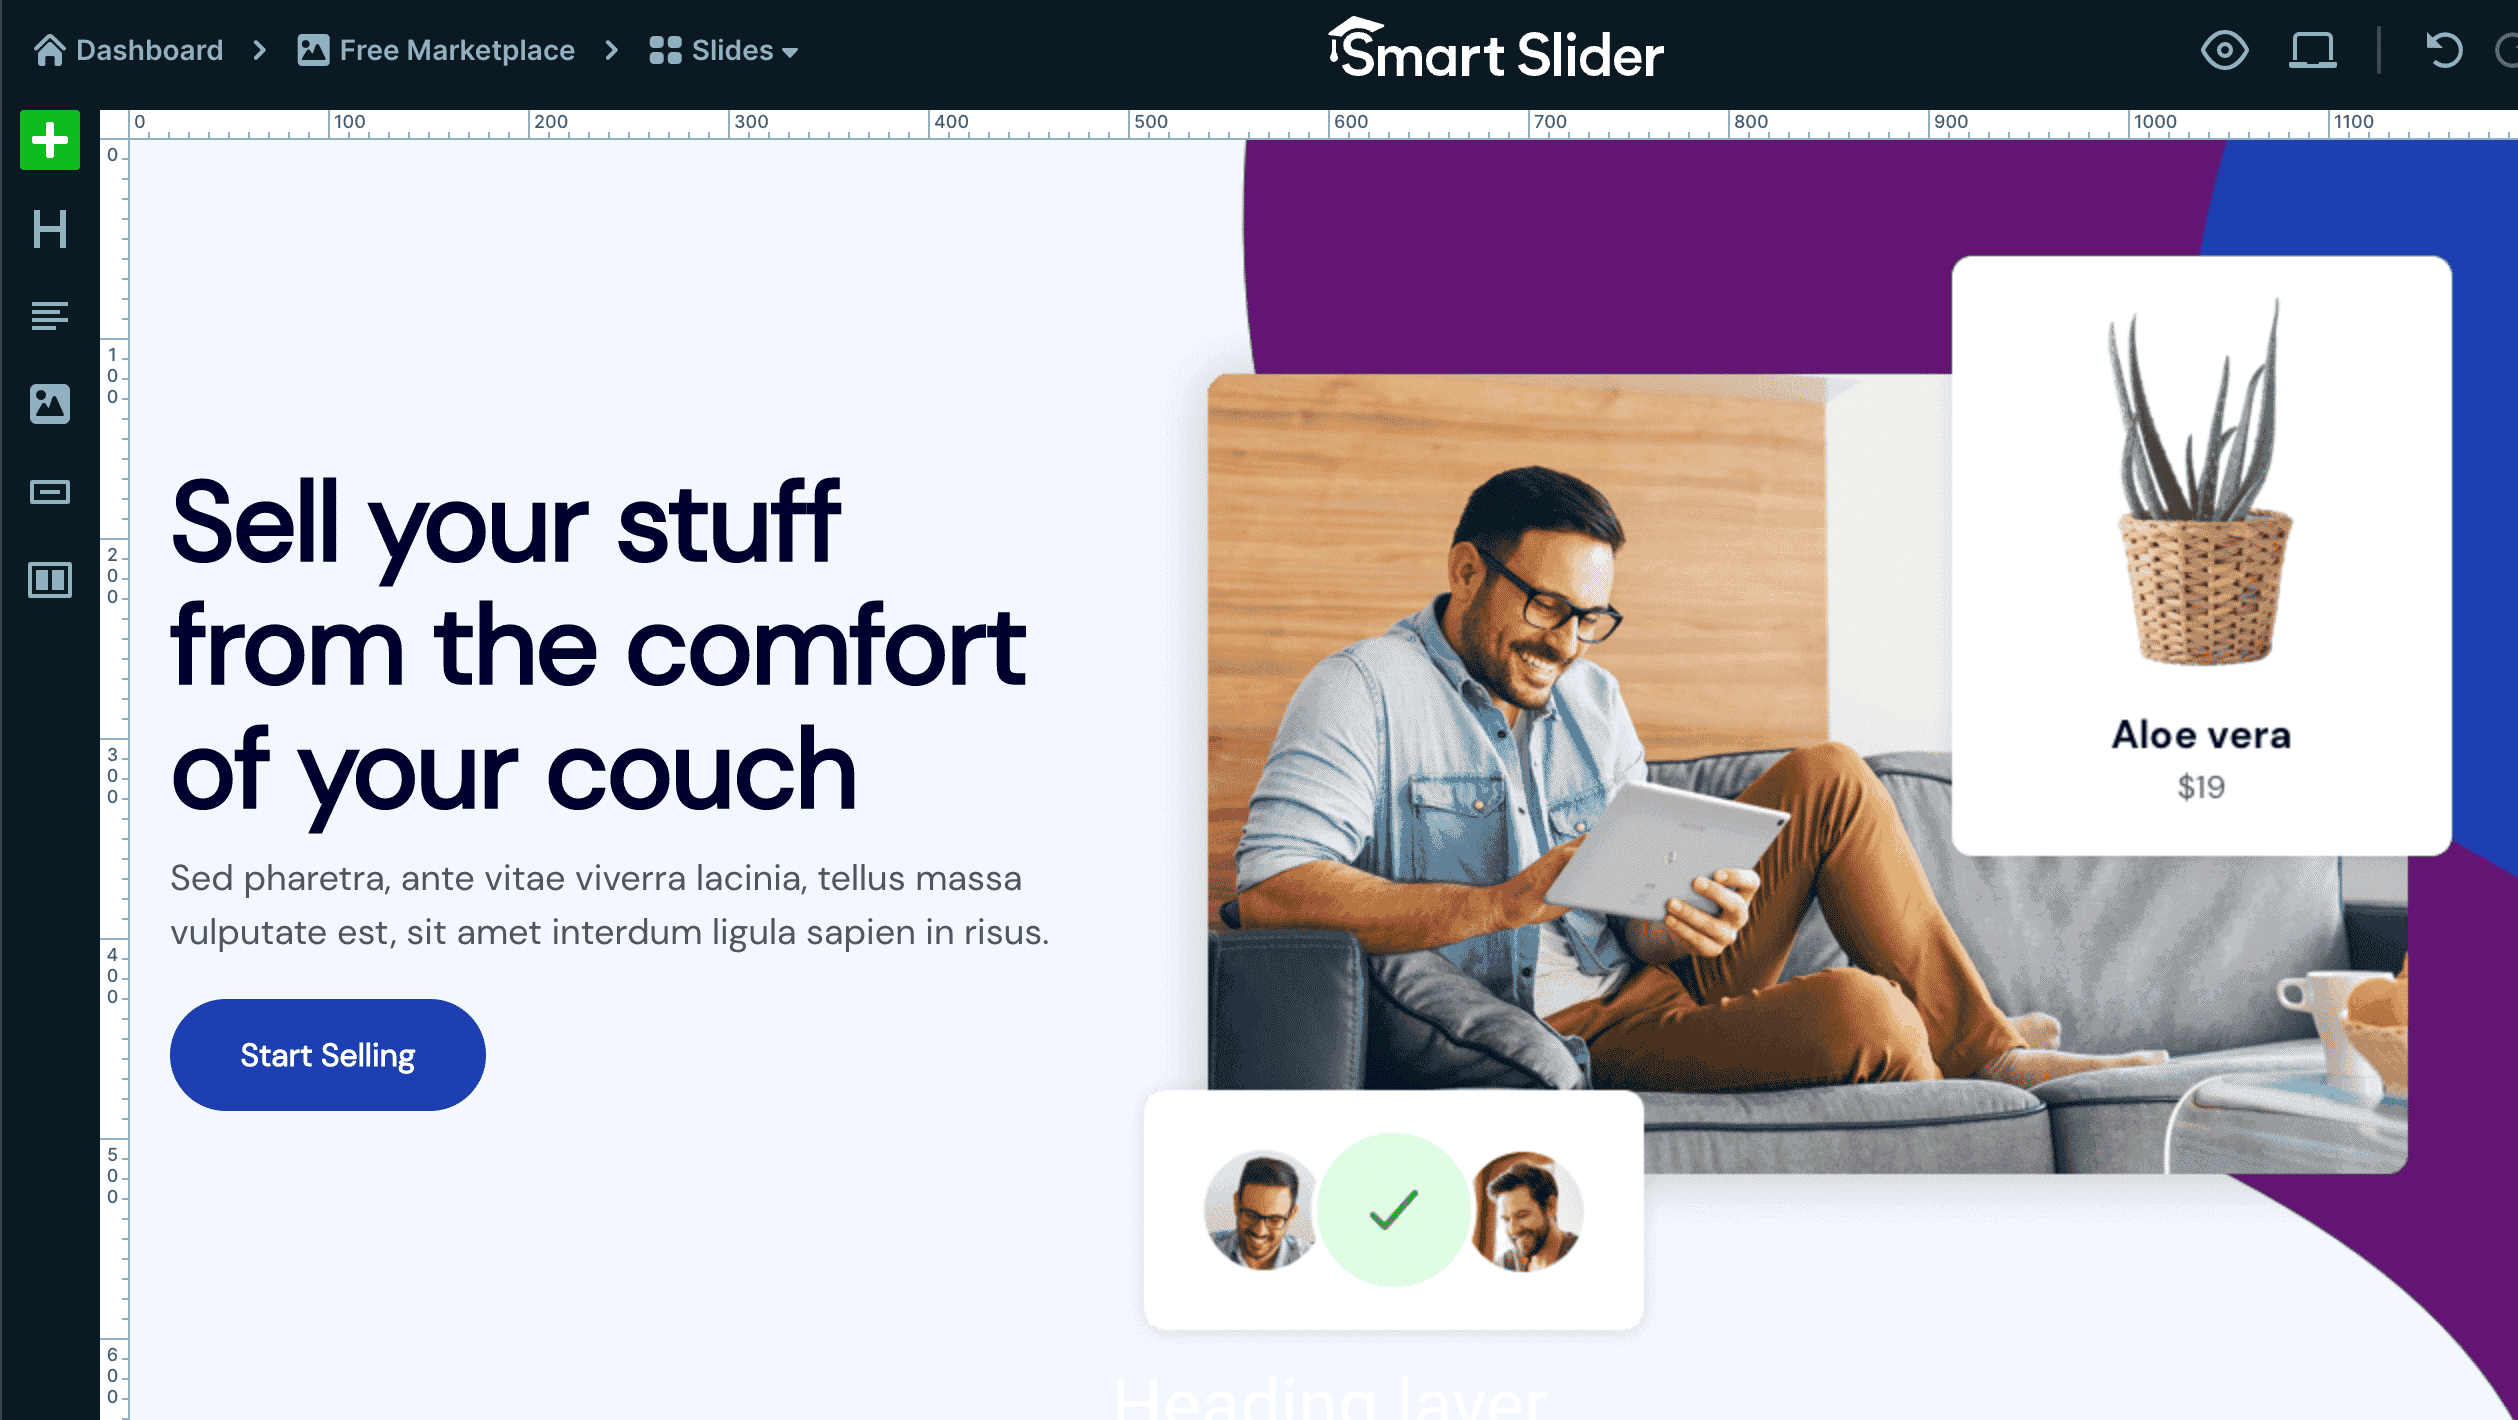 smart slider 3 content editor dashboard